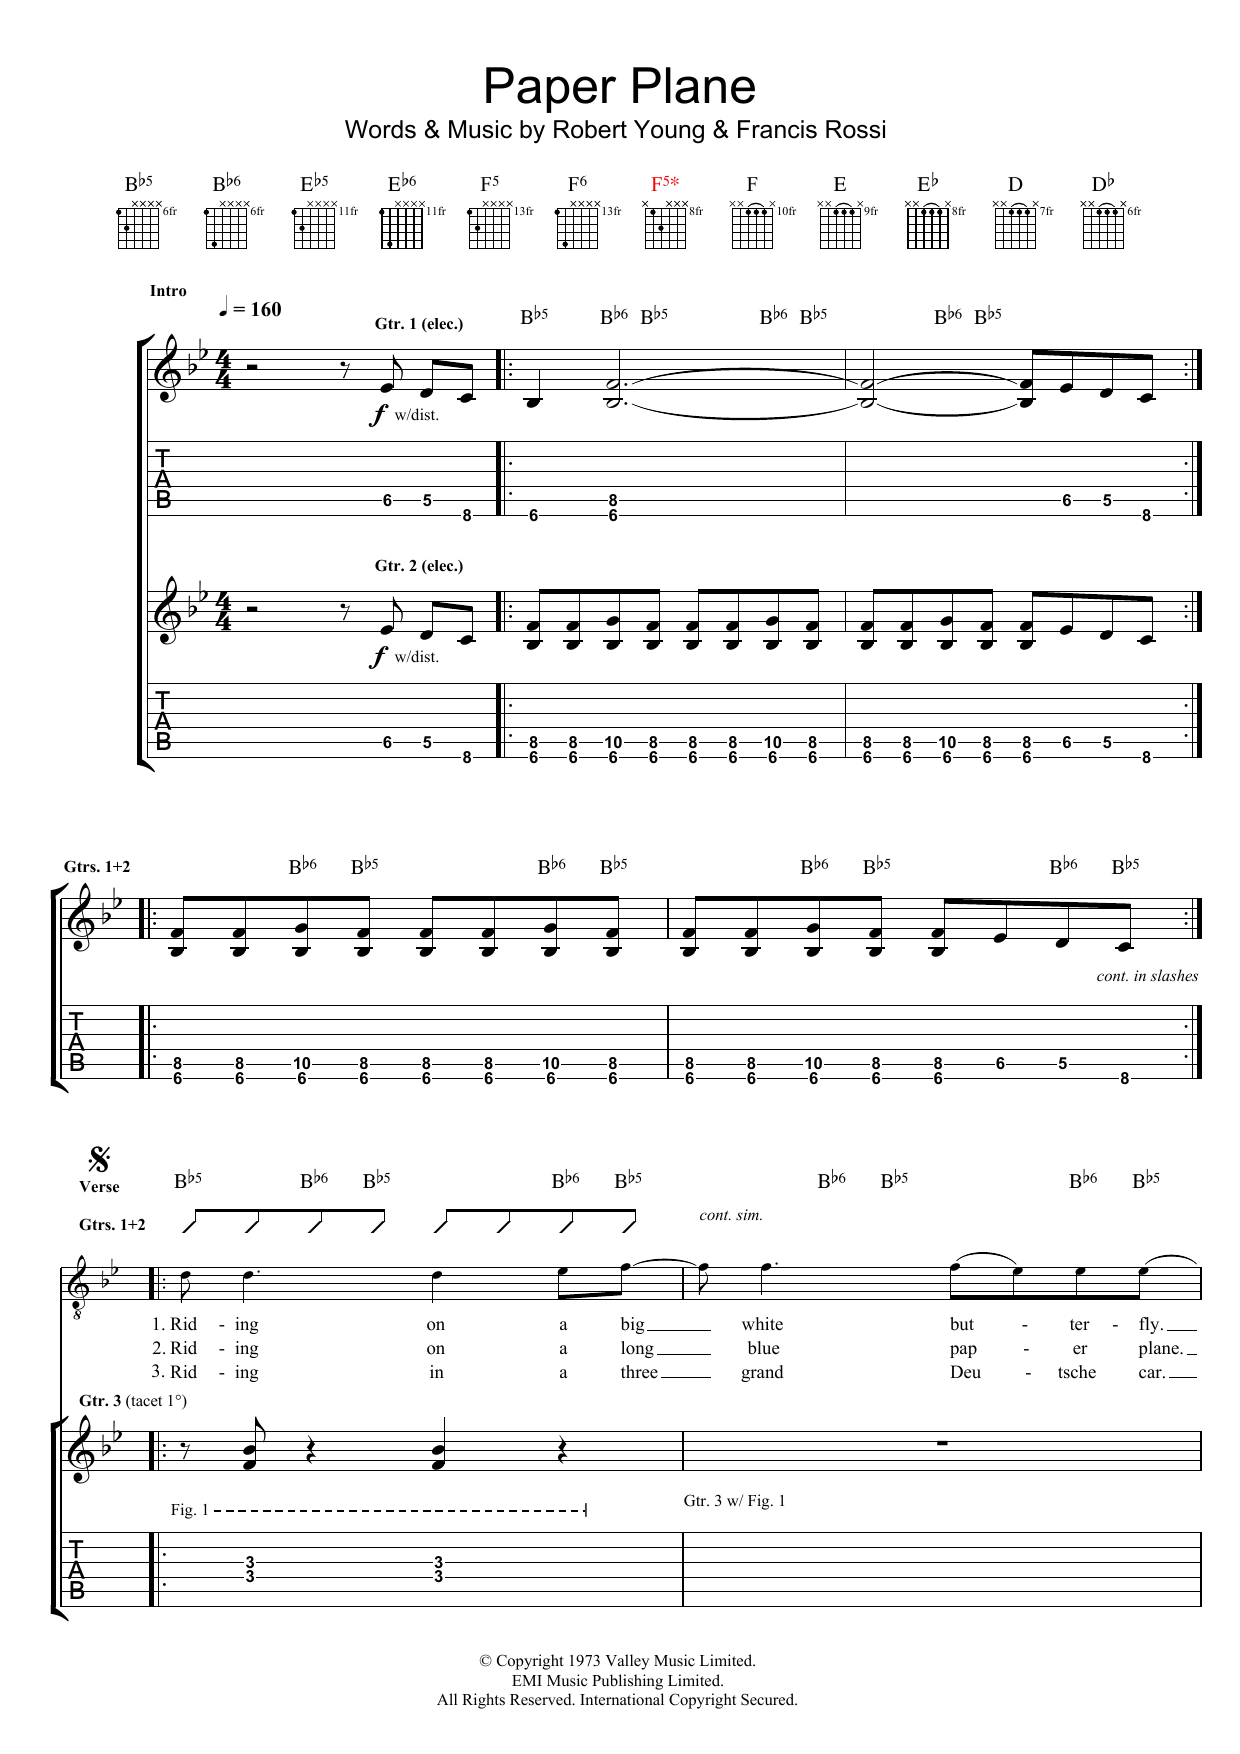 Status Quo Paper Plane Sheet Music Notes & Chords for Guitar Tab - Download or Print PDF